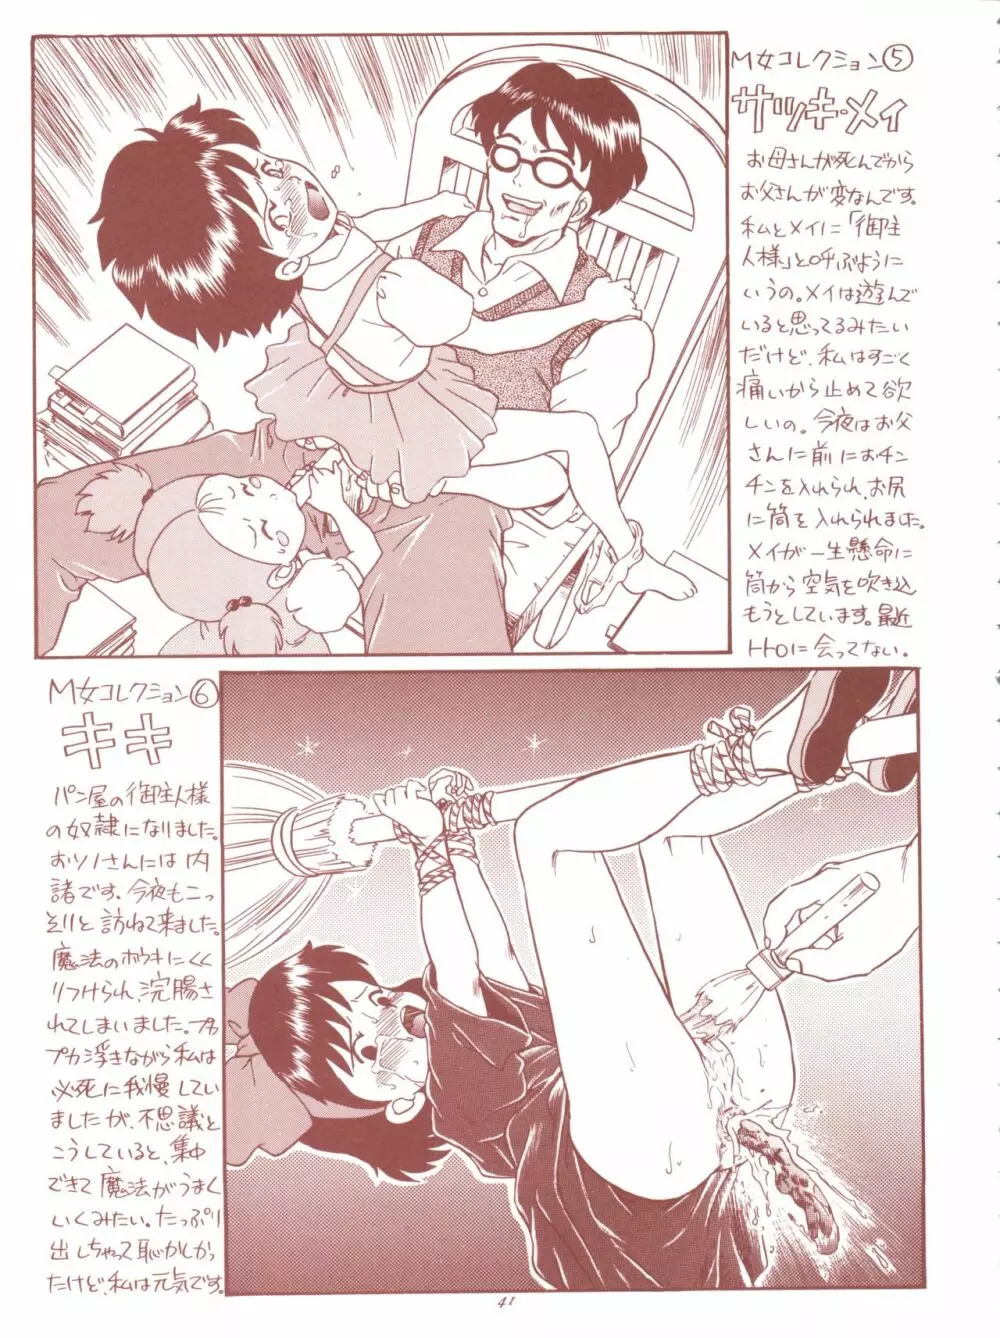 TAIL-MEN HAYAO MIYAZAKI BOOK 41ページ